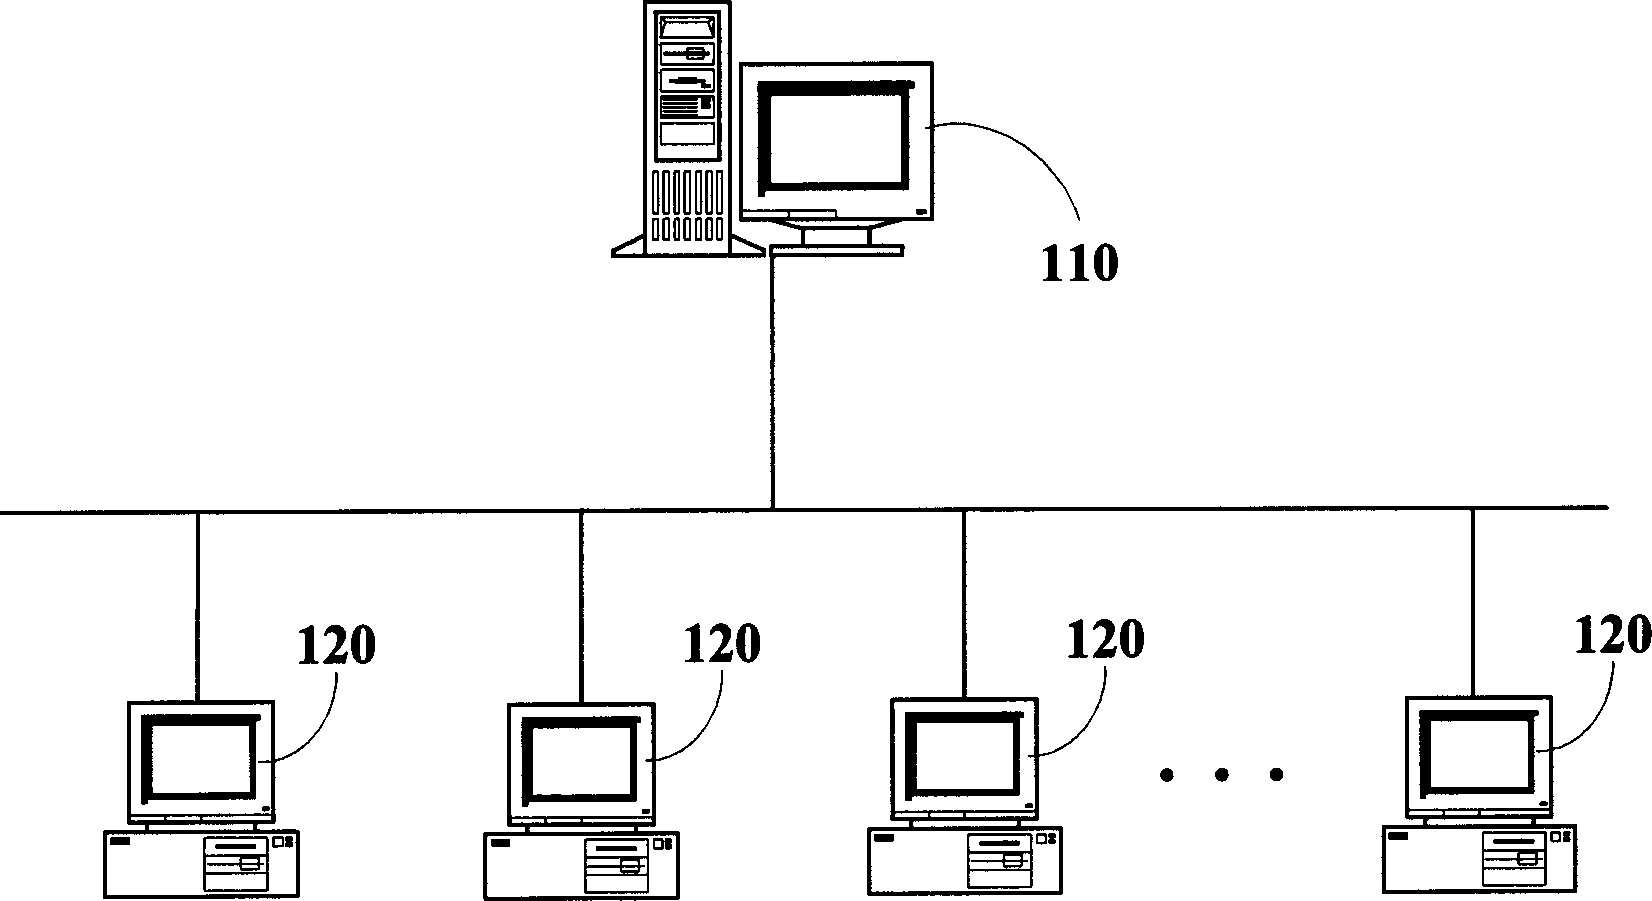 Computer testing method